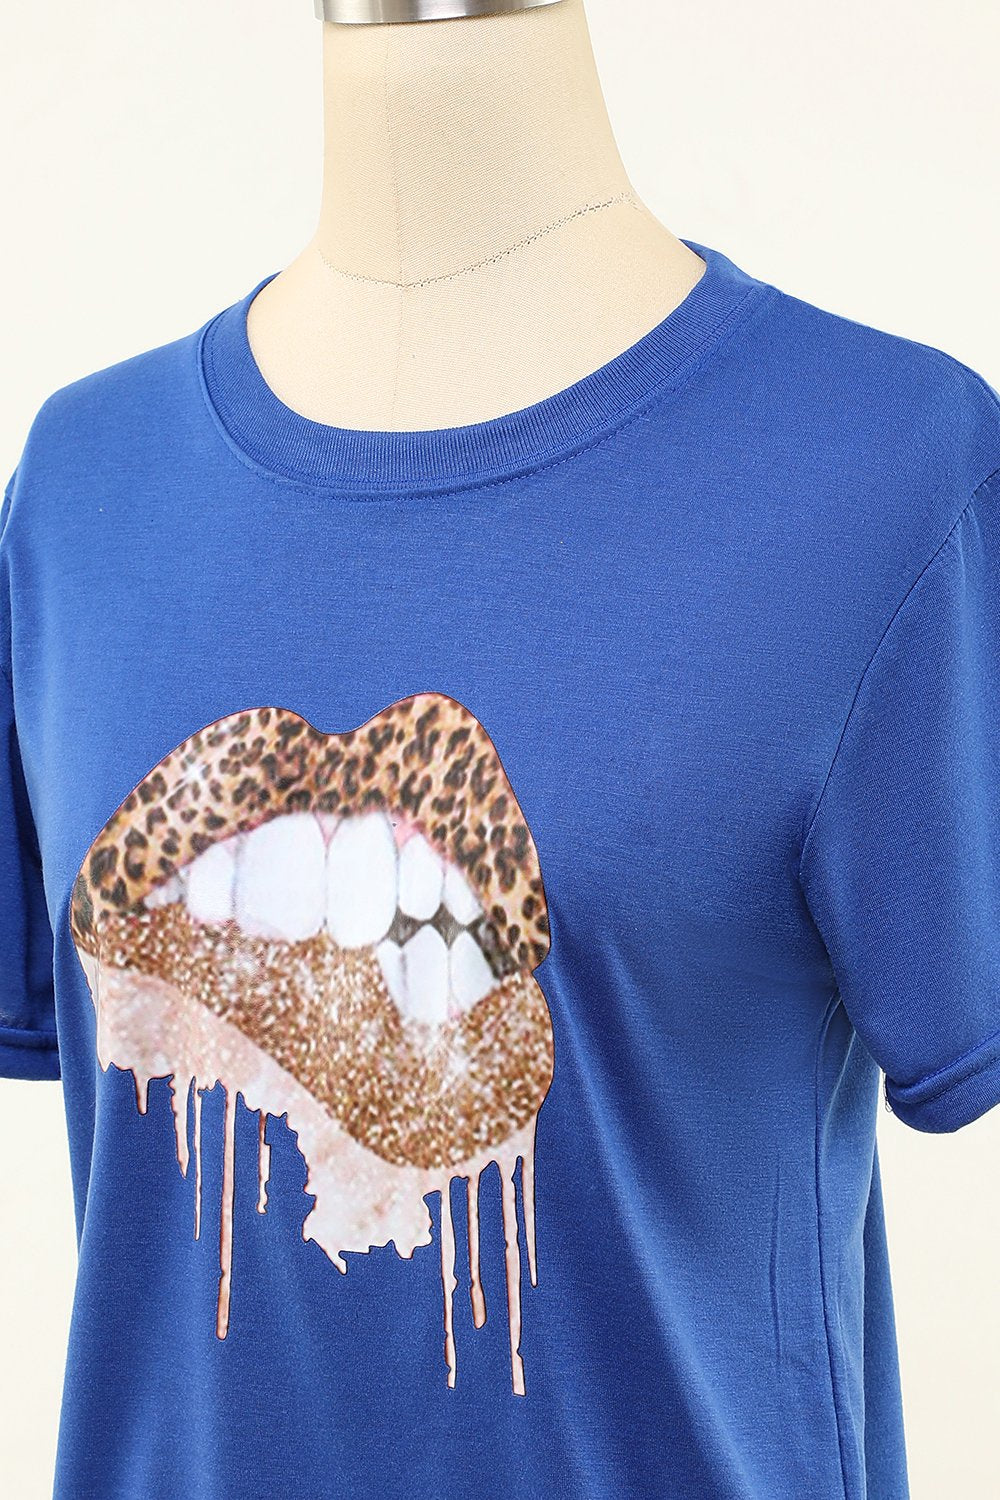 Lips Printed Royal Blue Round Neck T-shirt